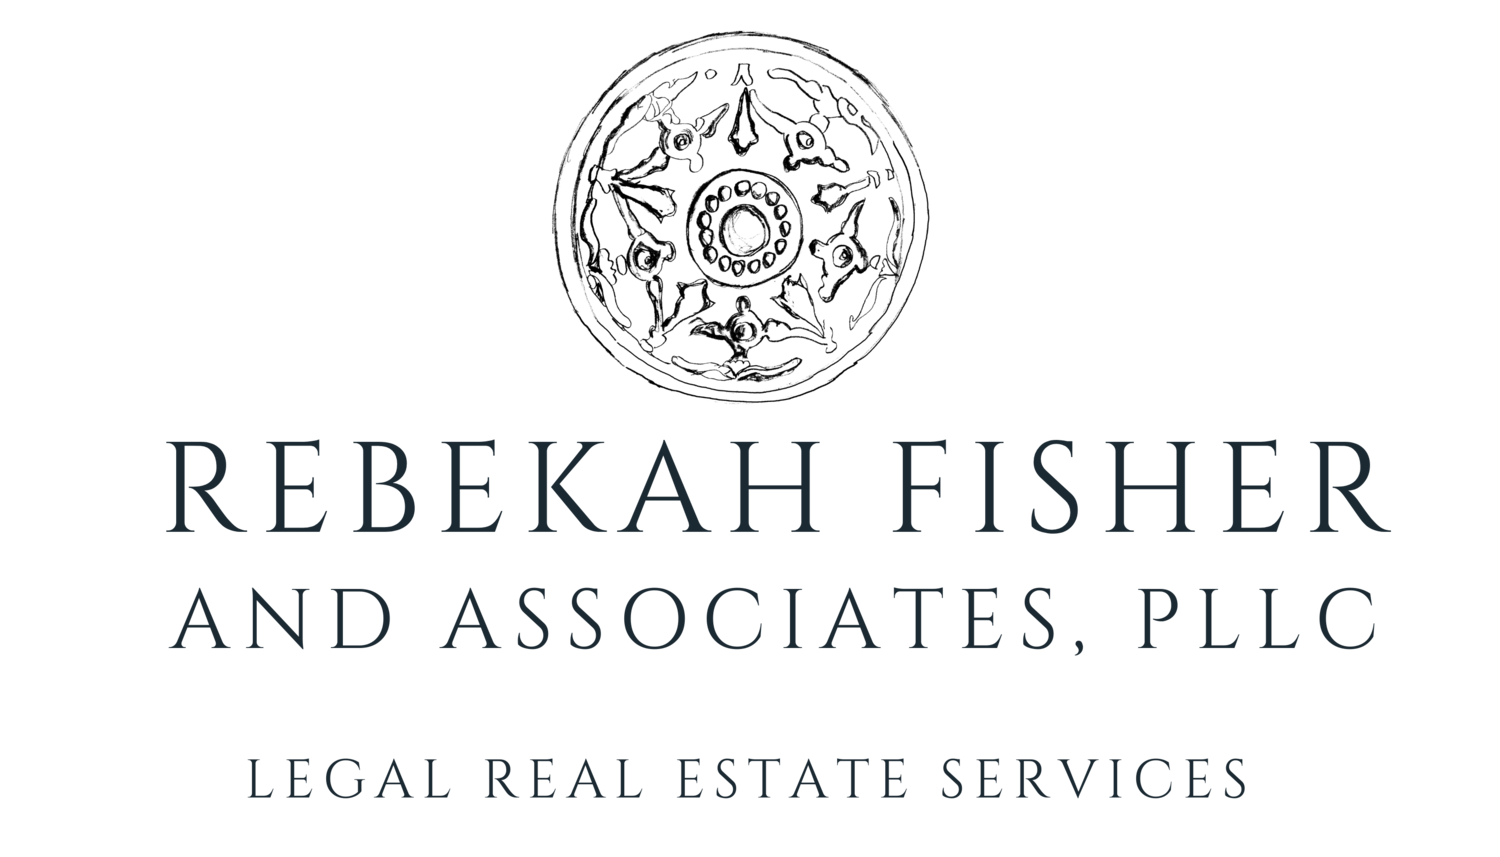 REBEKAH FISHER AND ASSOCIATES